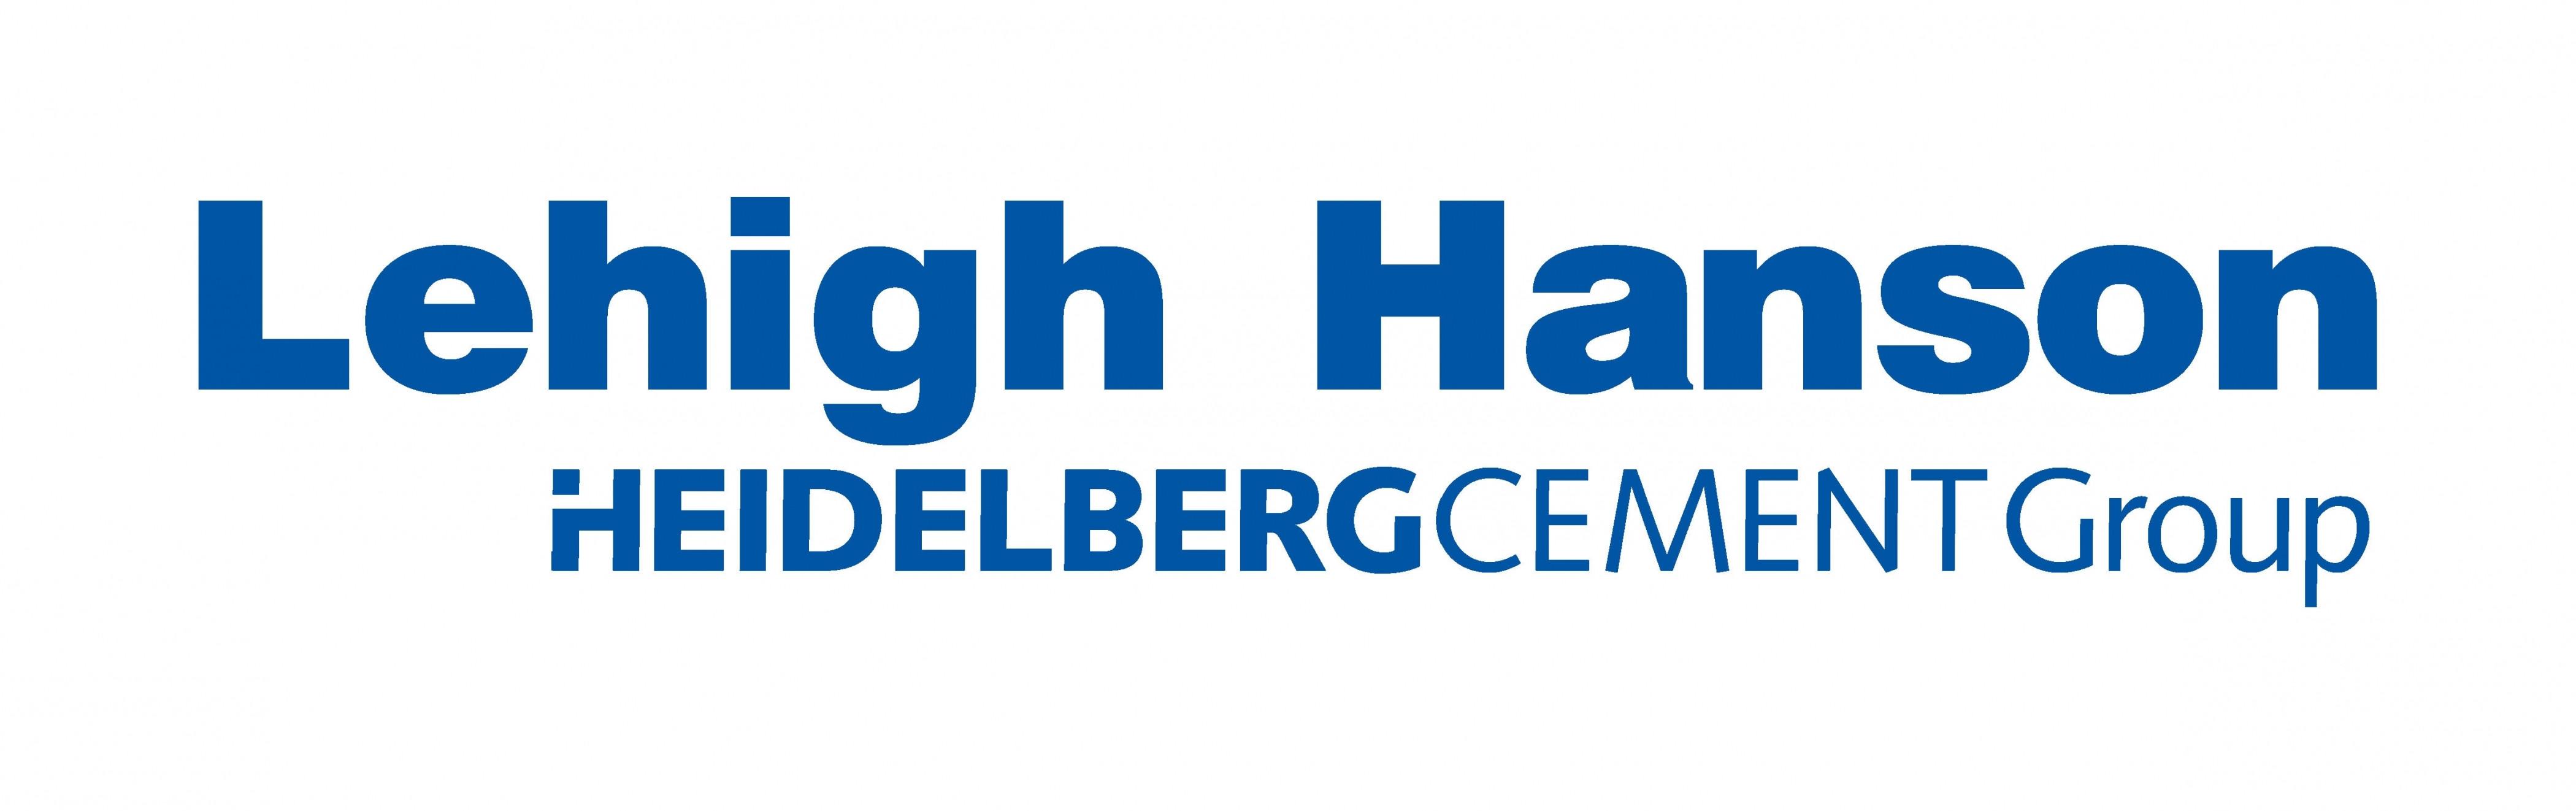 Lehigh Logo - lehigh-hanson-logo[1] – Baltimore Hydraulics